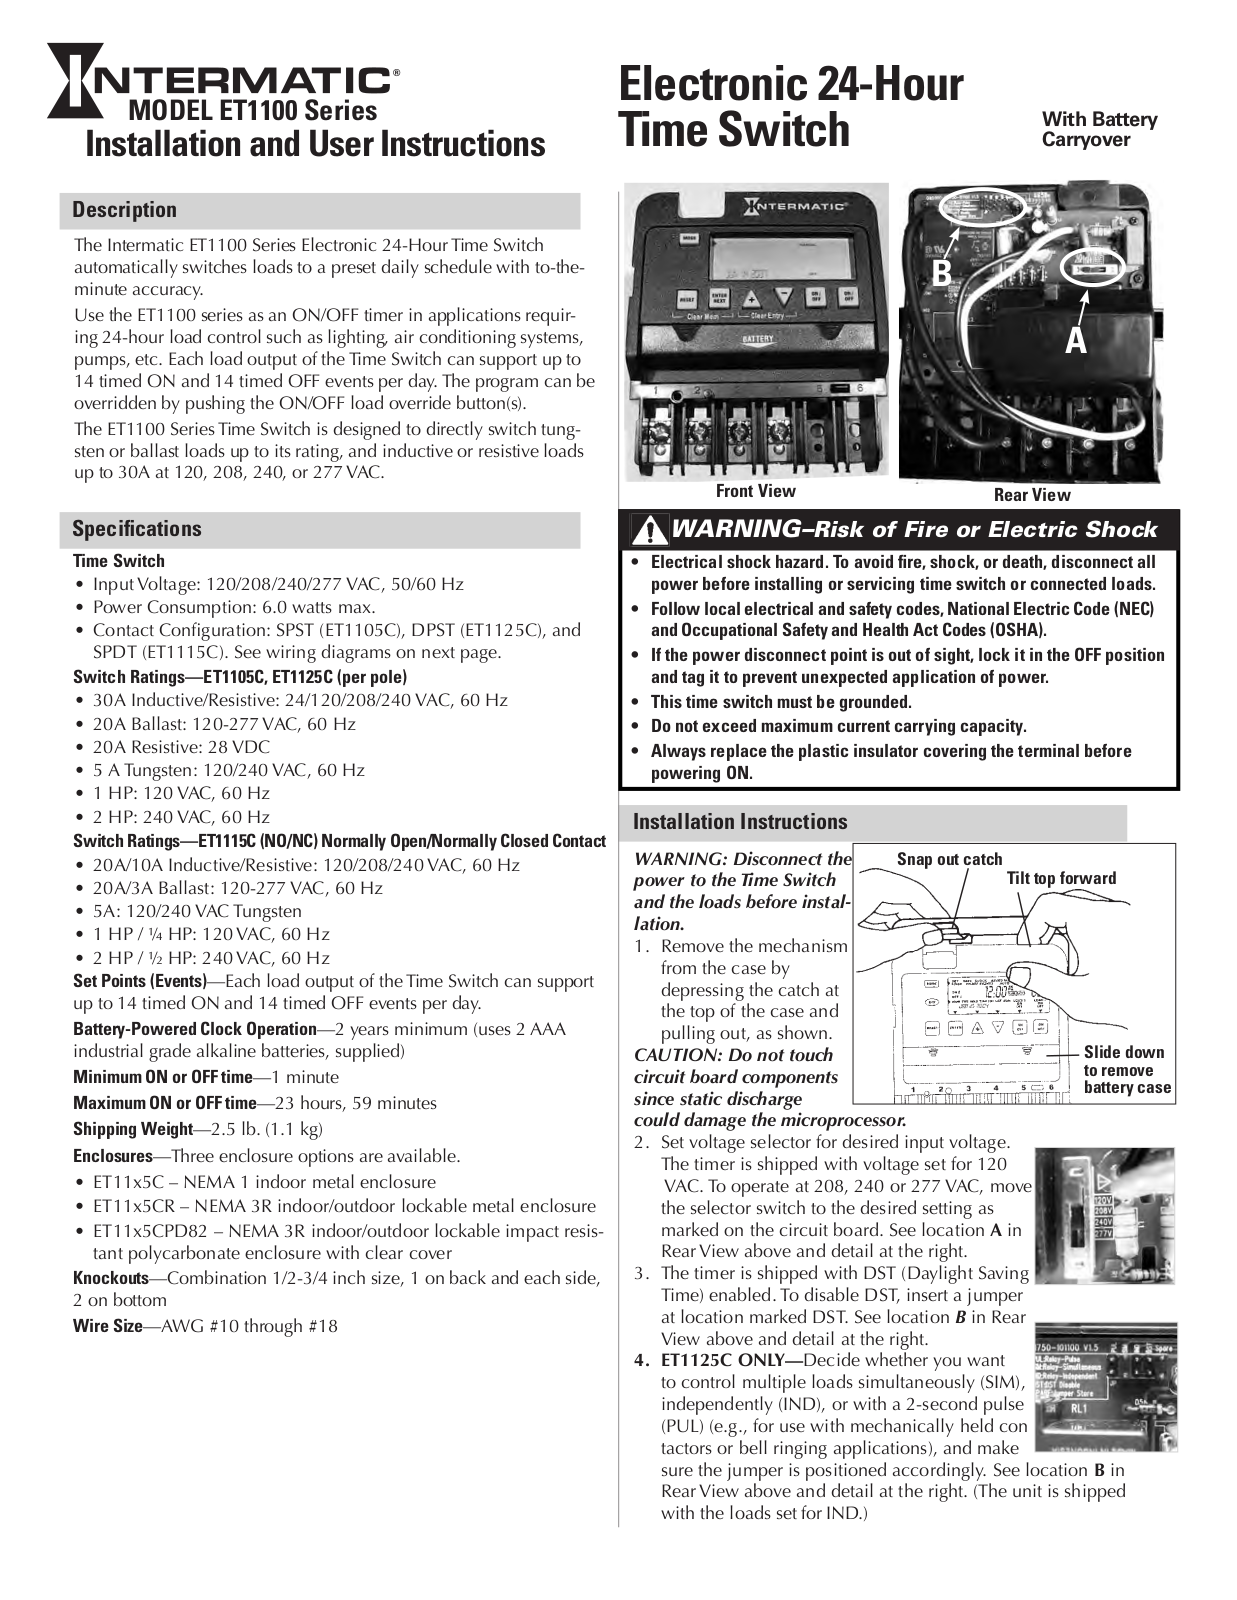 Intermatic ET1100 Owner's Manual